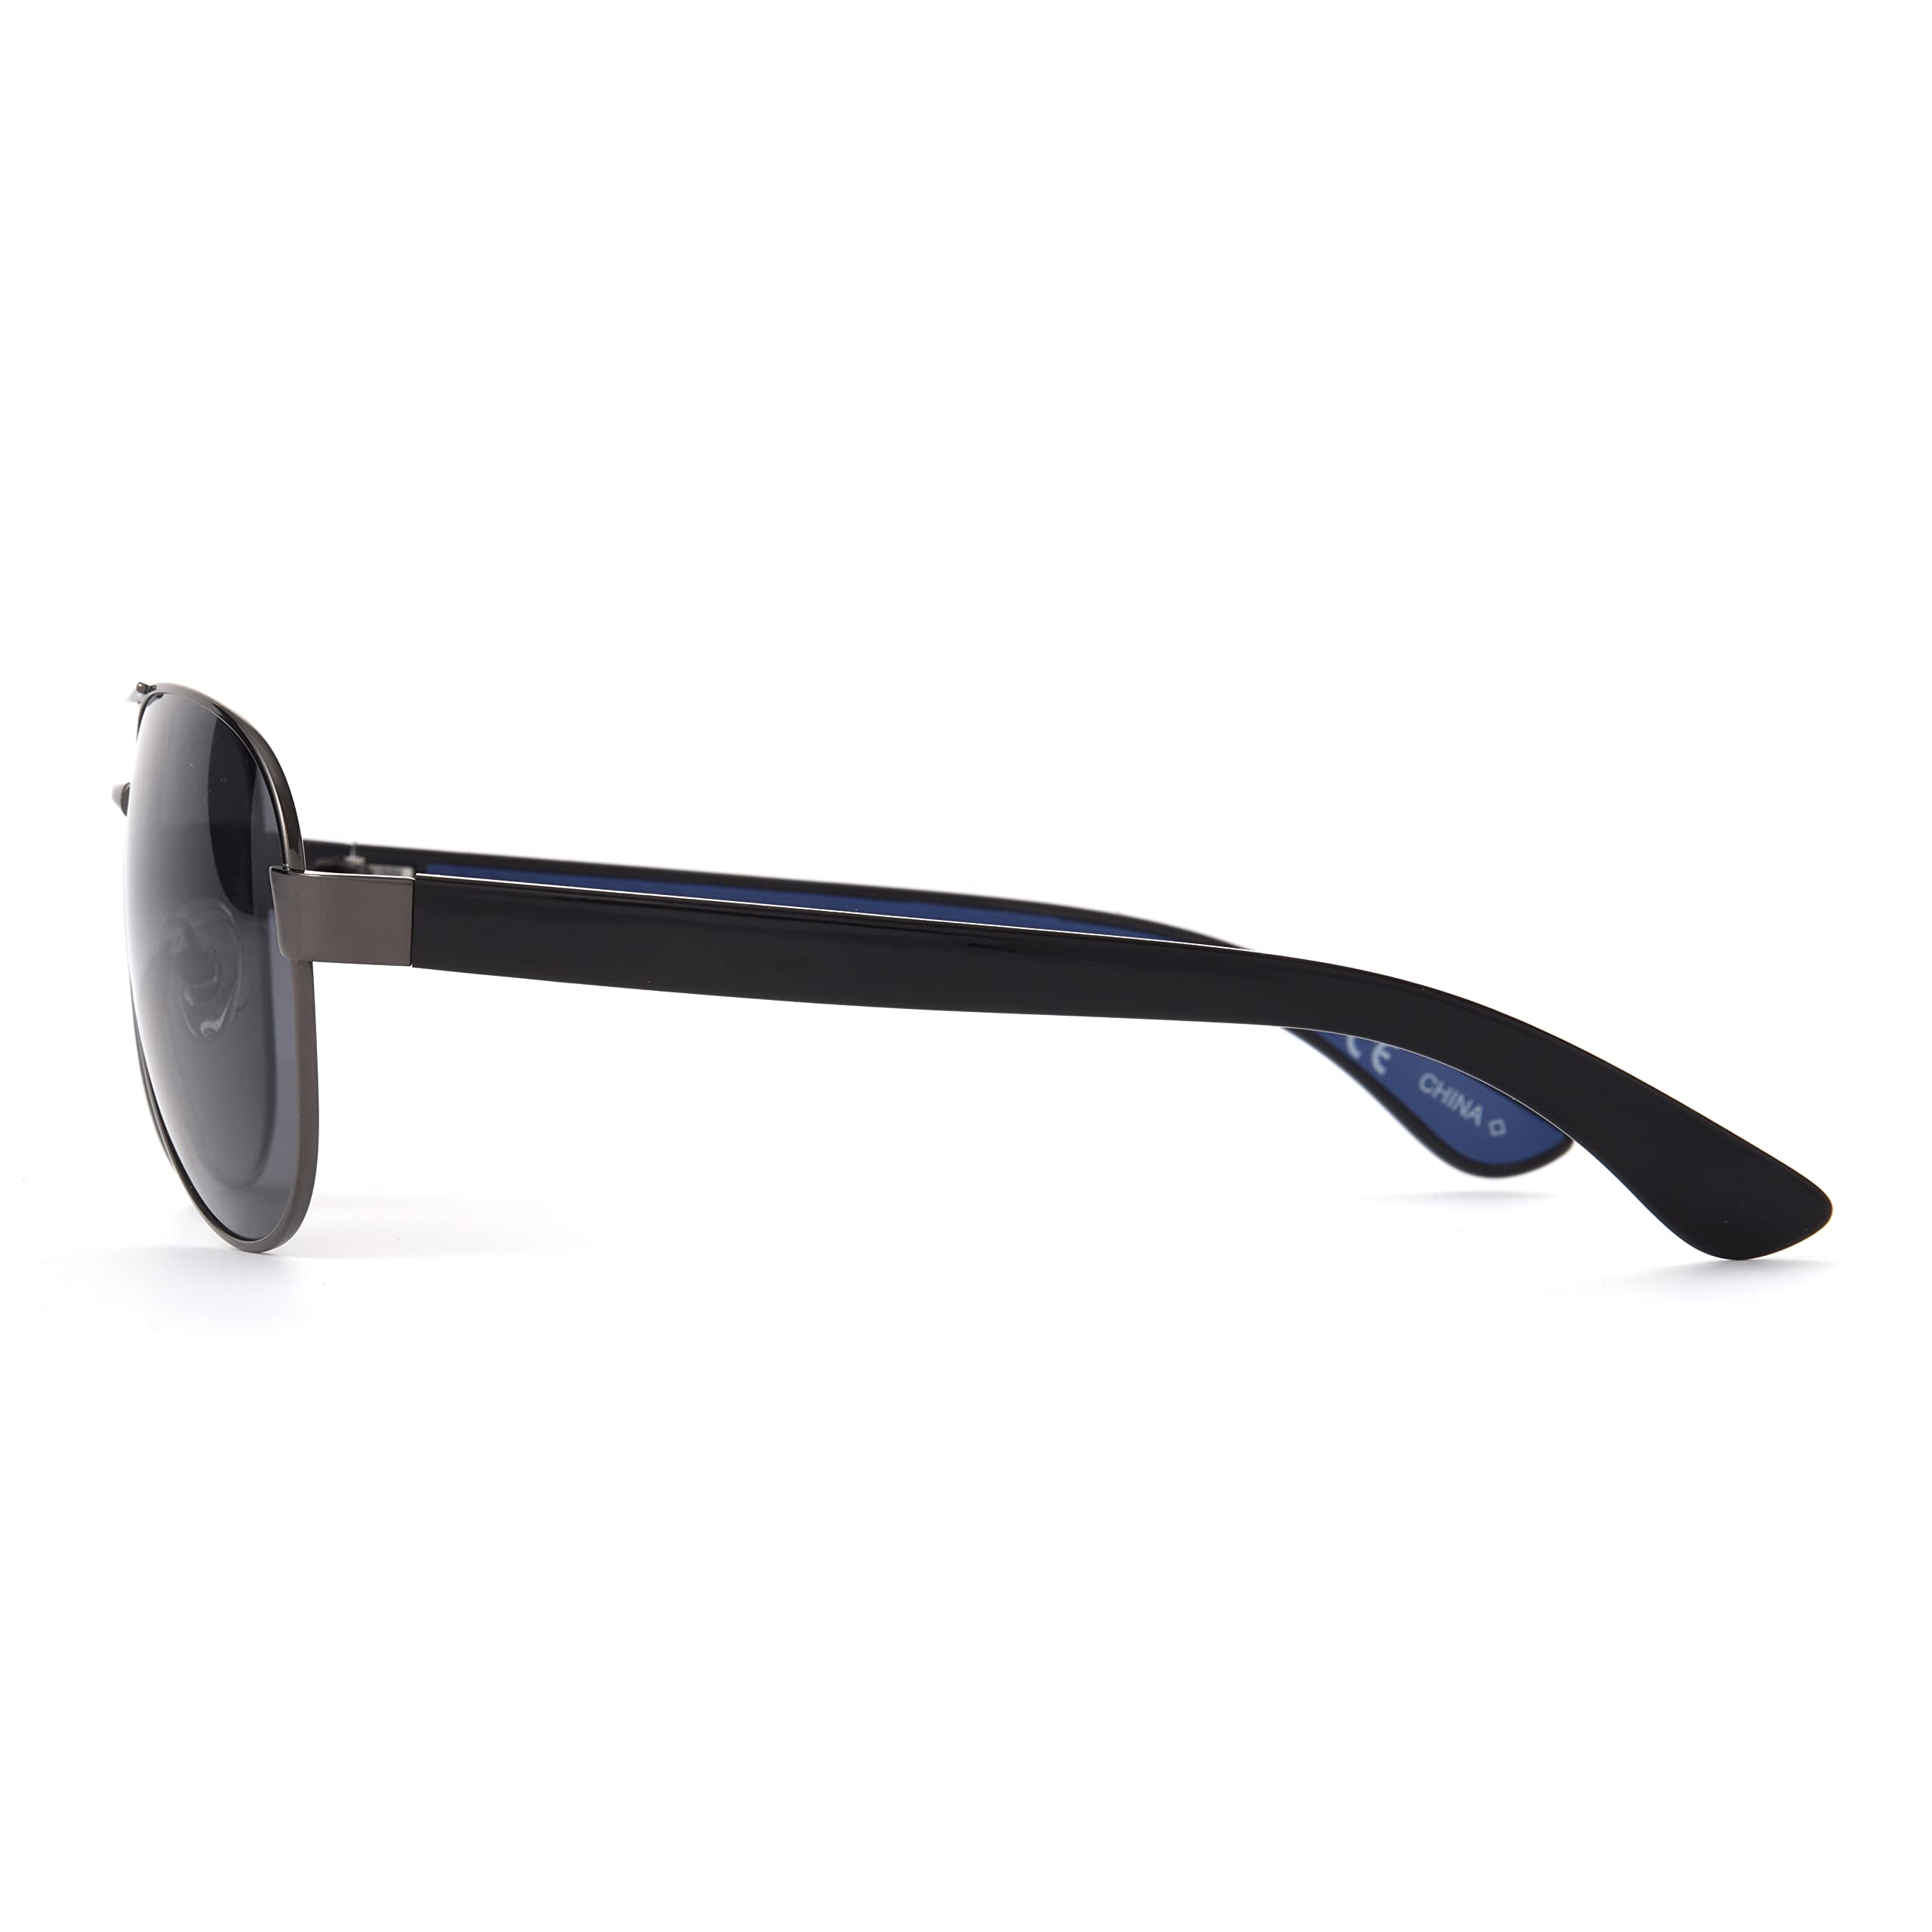 Dockers Men's Bo Sunglasses Polarized Aviator, Gunmetal, 54mm